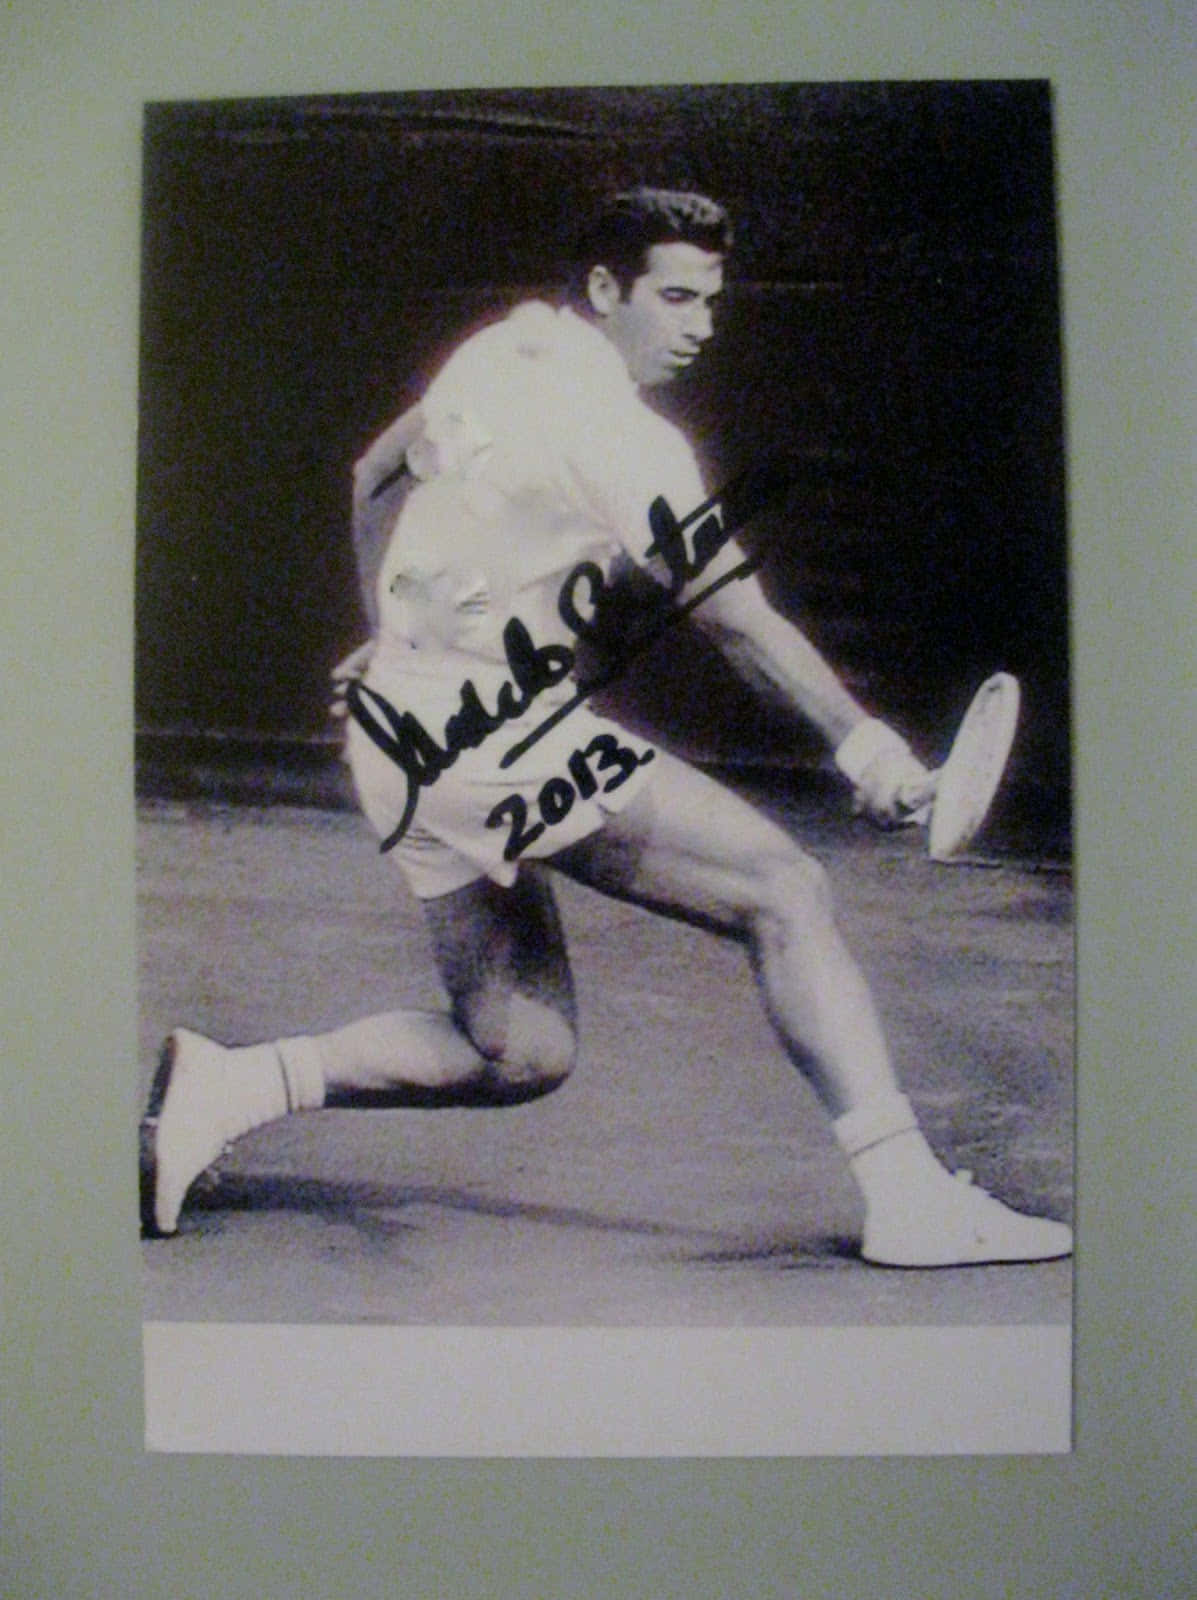 Printed Photo Of Manuel Santana With His Signature Wallpaper